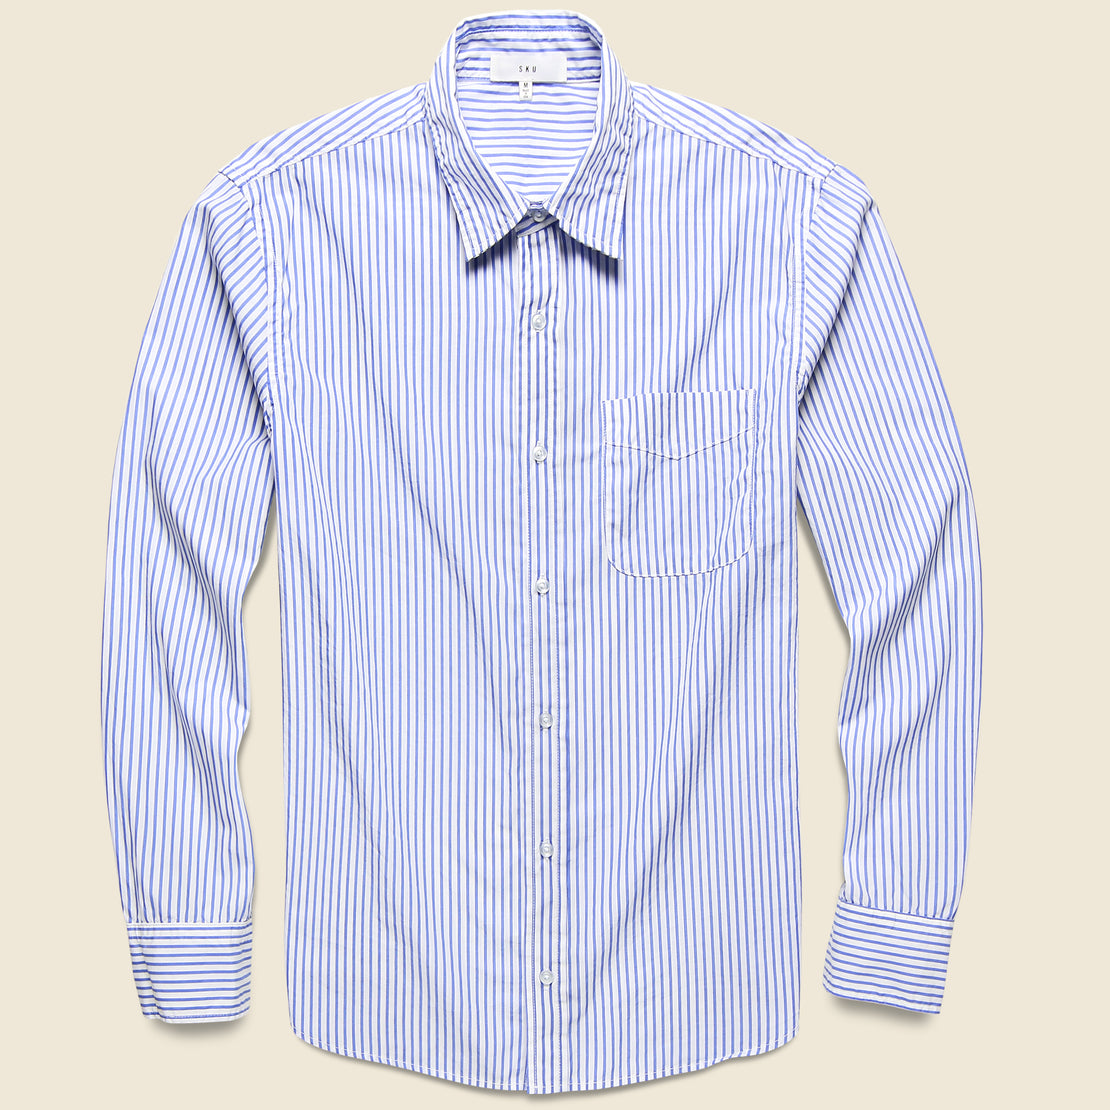 Save Khaki Striped Standard Shirt - Blue